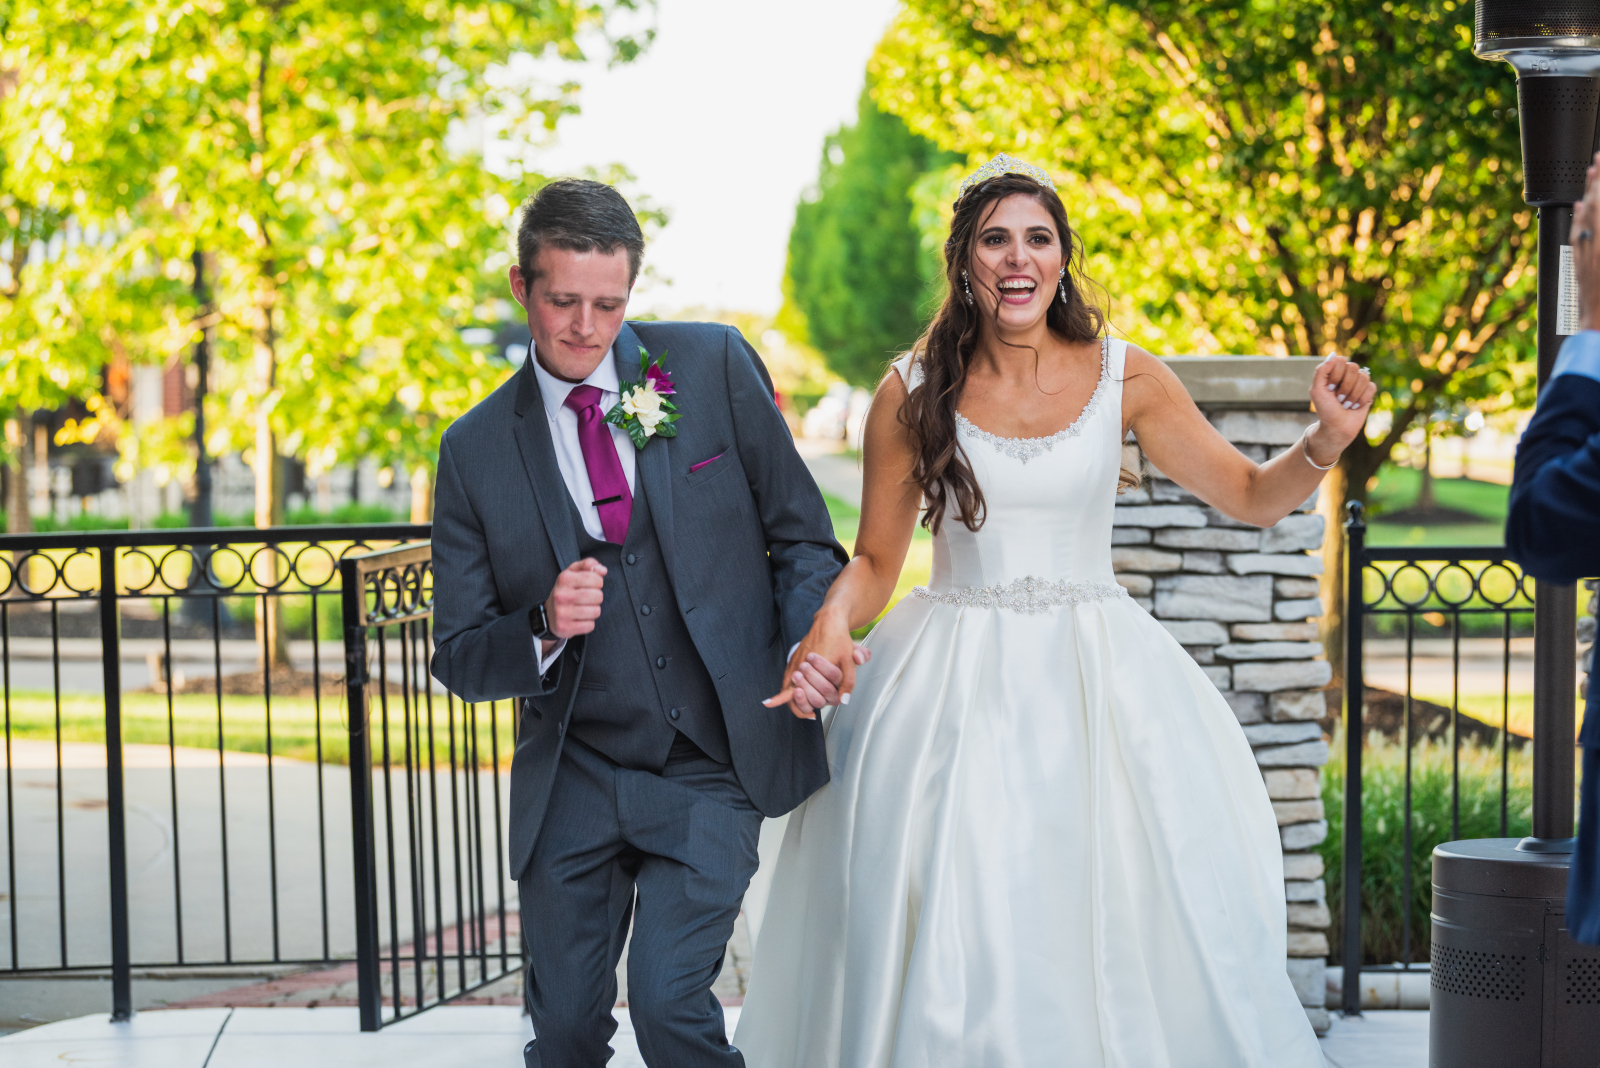 Bride and groom smiling, dancing, bridal party entrance, metal fence, green, trees, nature, sweet wedding reception at Crocker Park, Westlake OH